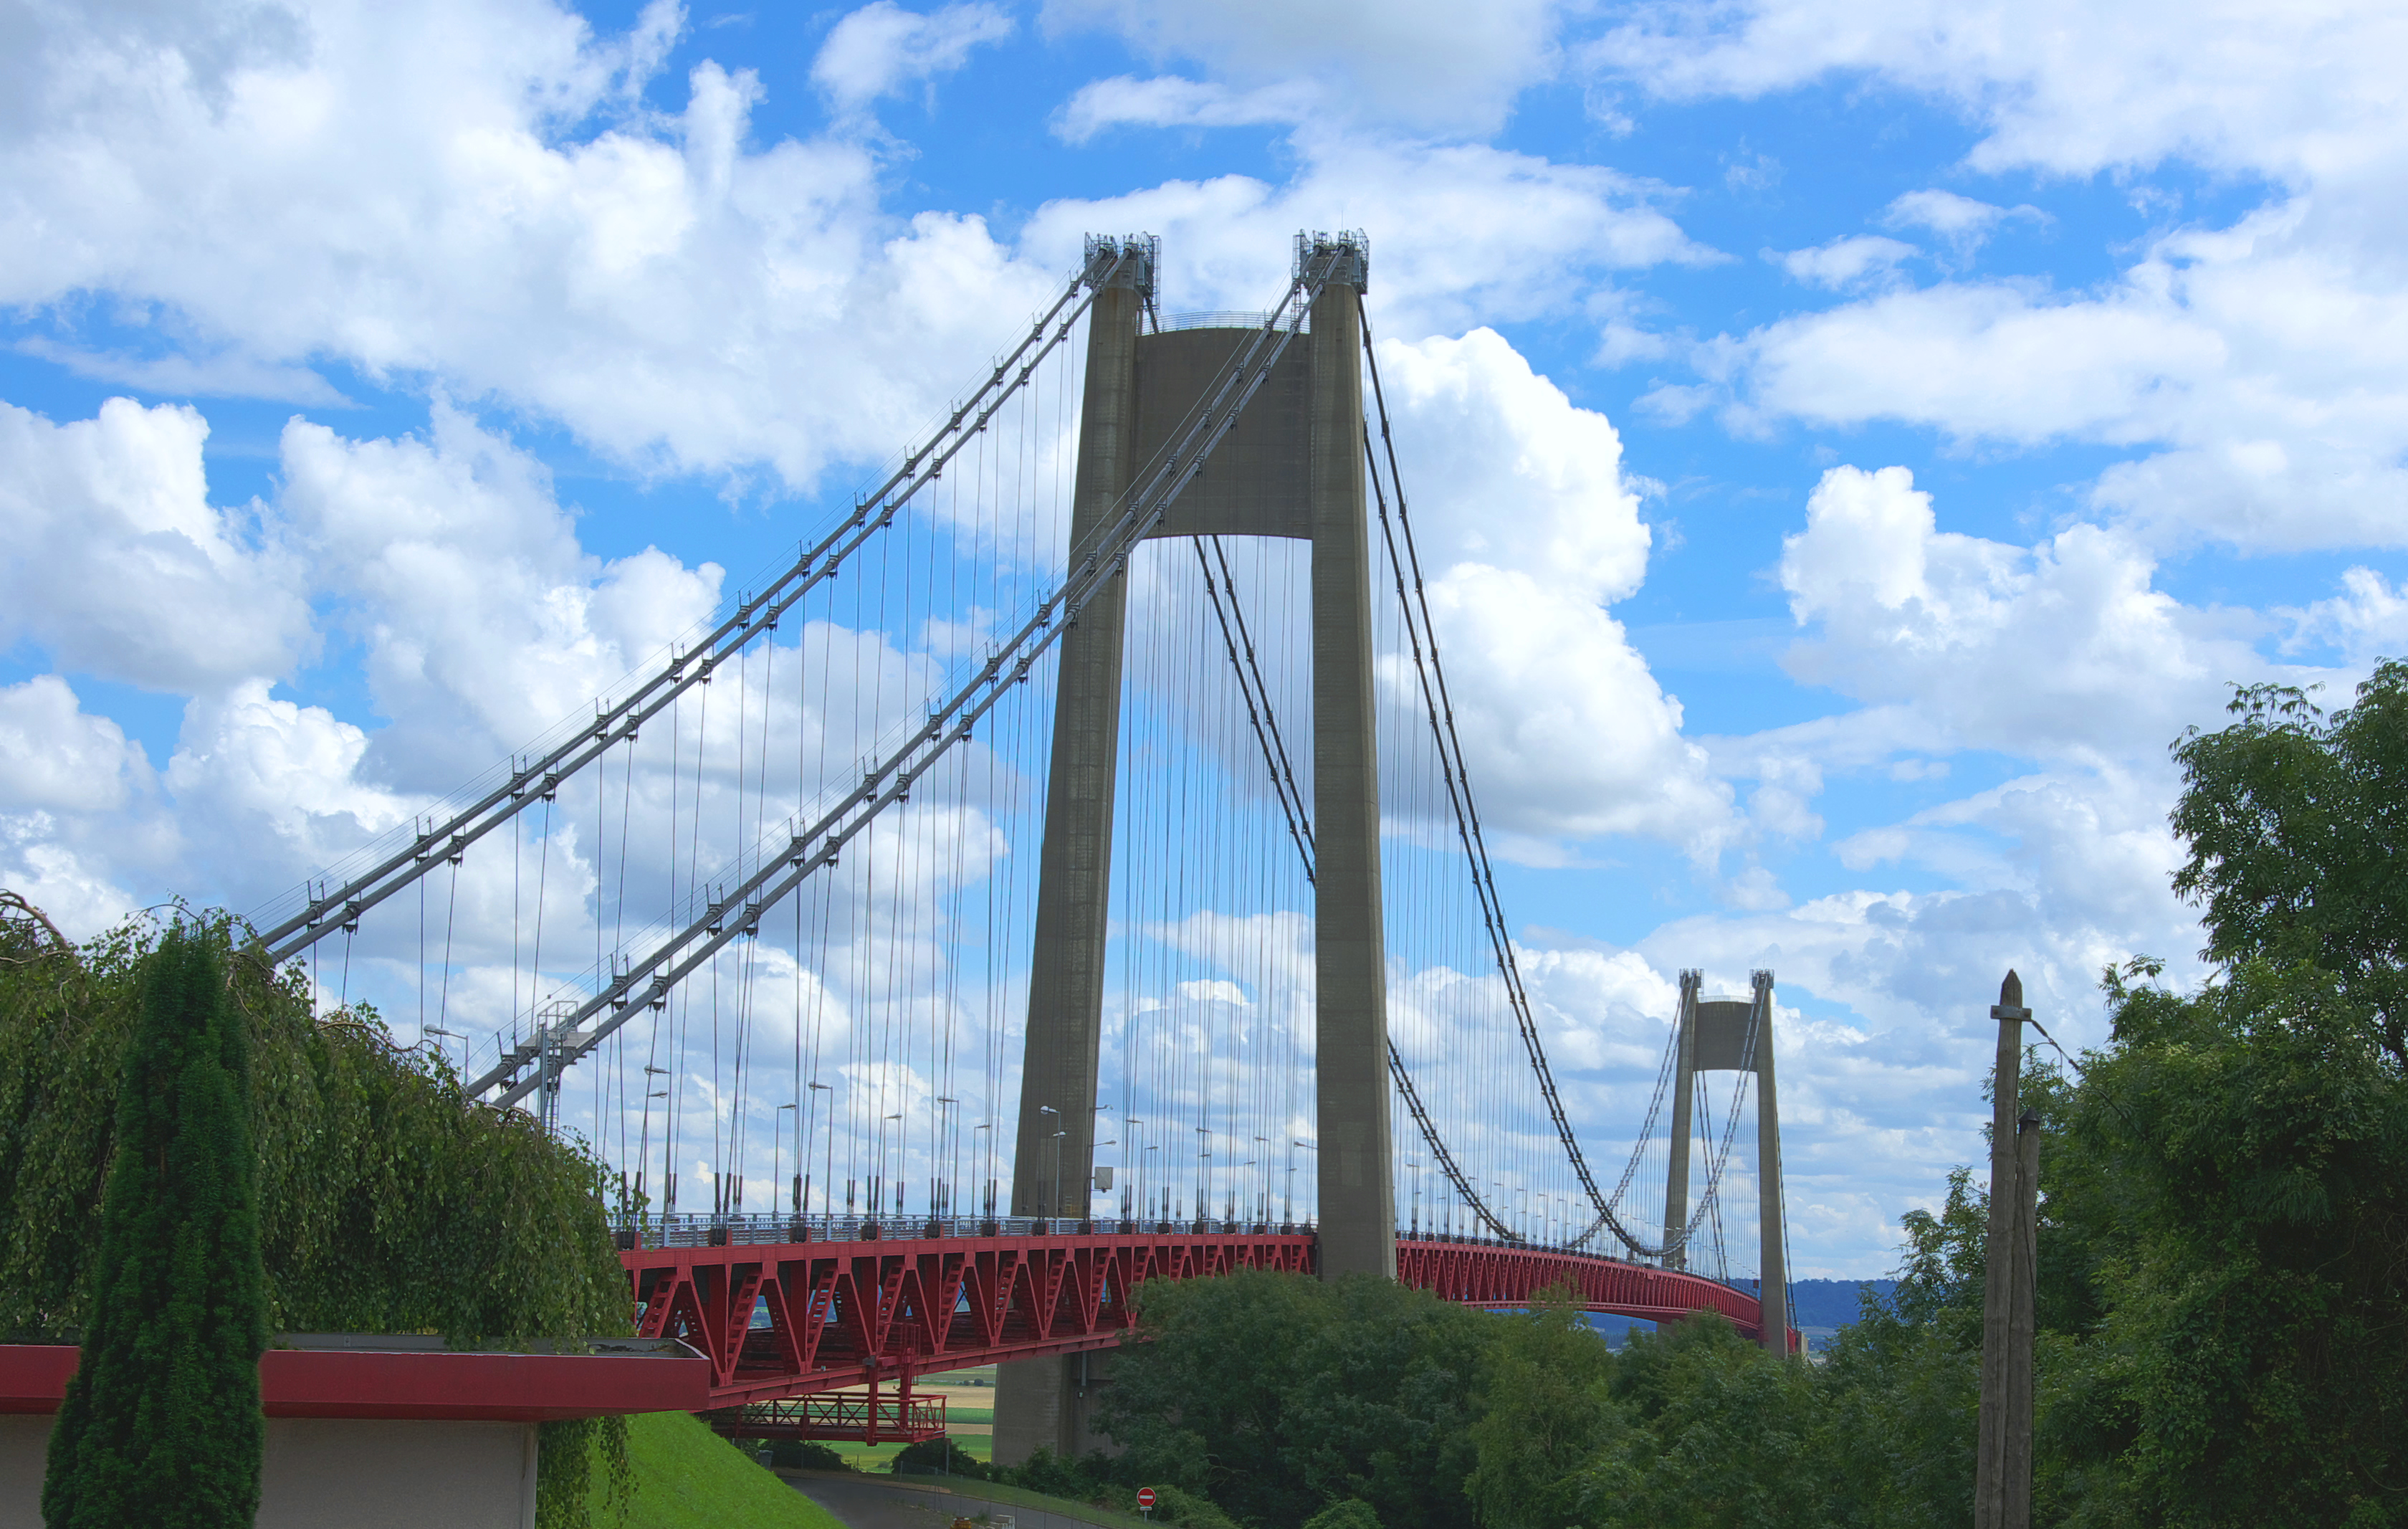 File:Pont tancarville.jpg - Wikimedia Commons